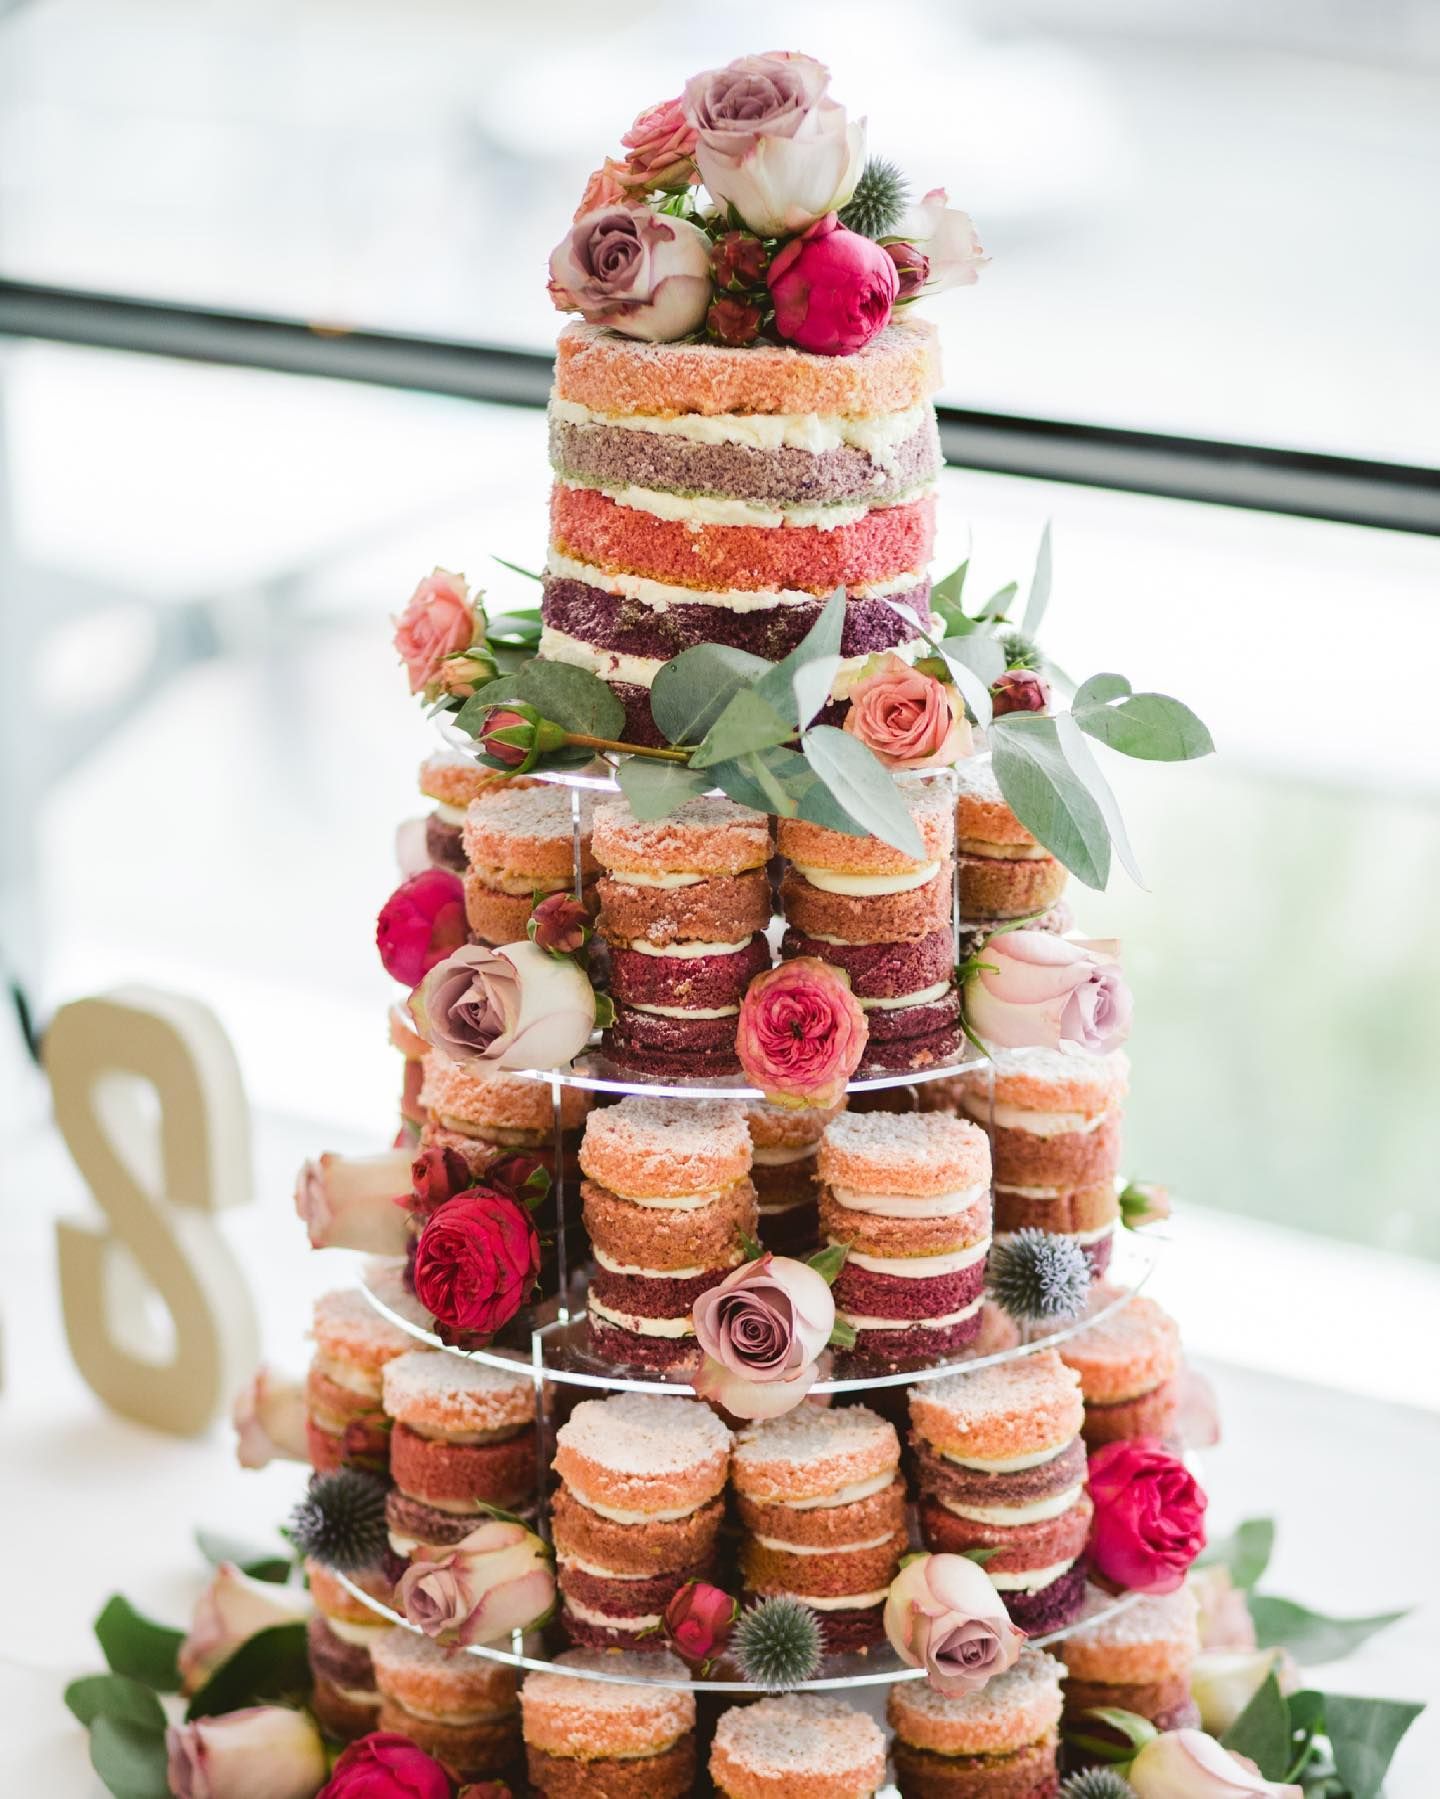 tiered wedding cake